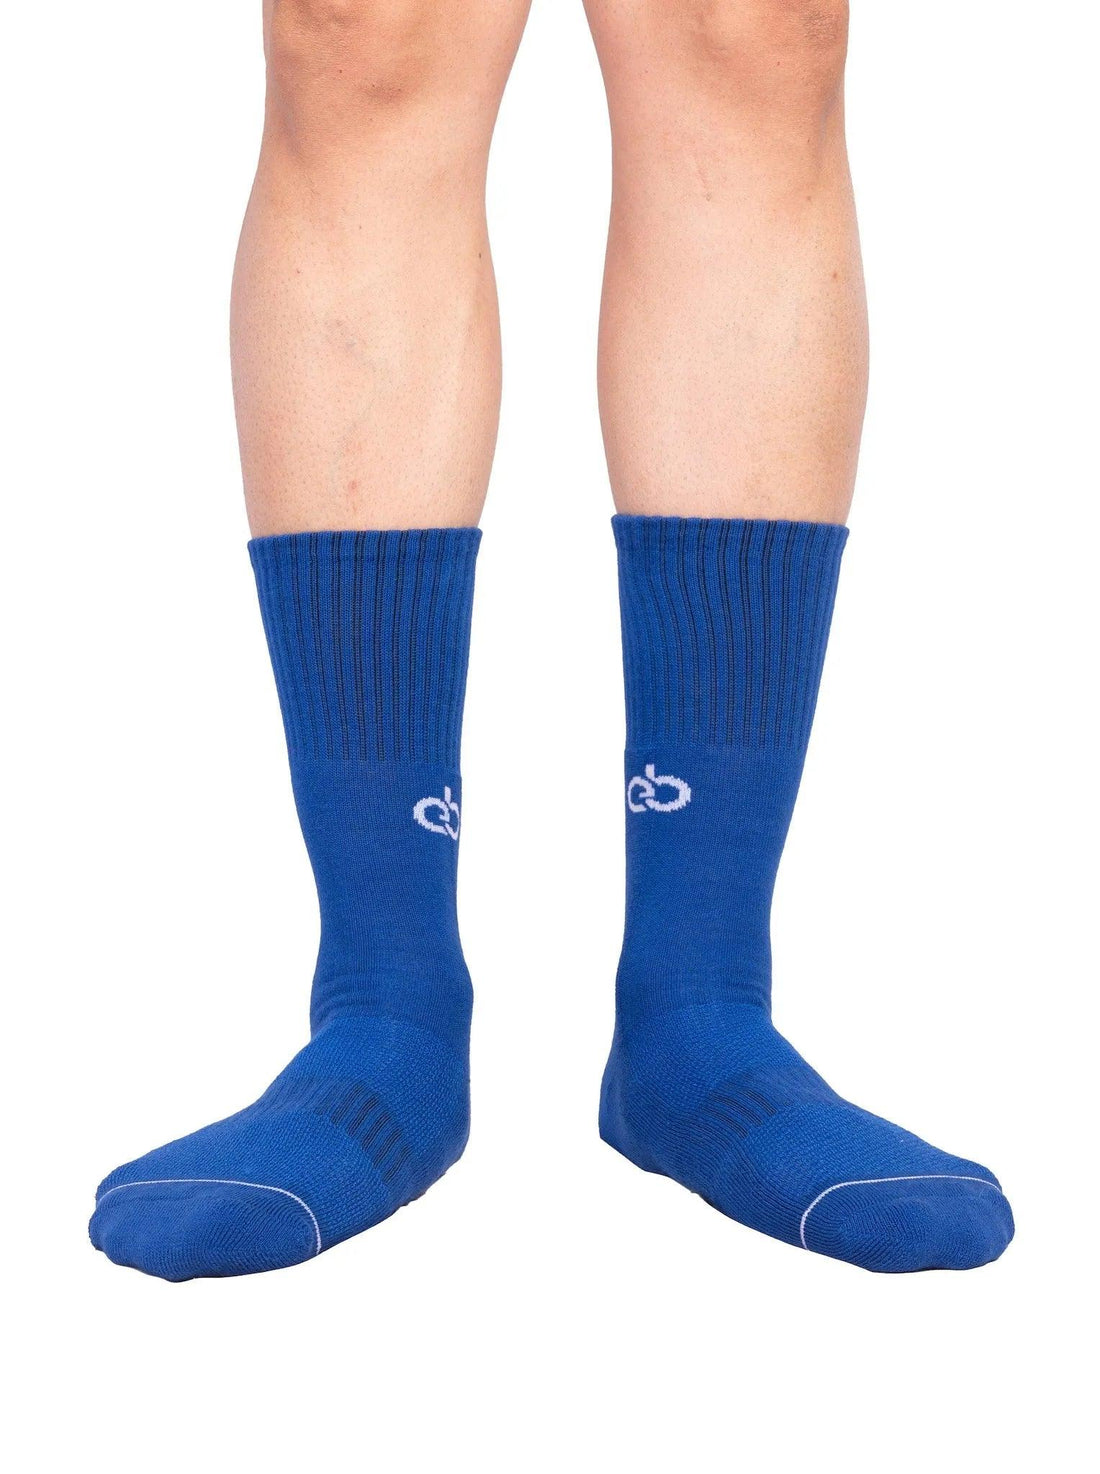 Socks - Regal Sapphire Crew Socks - Royal Blue - Erobold - 